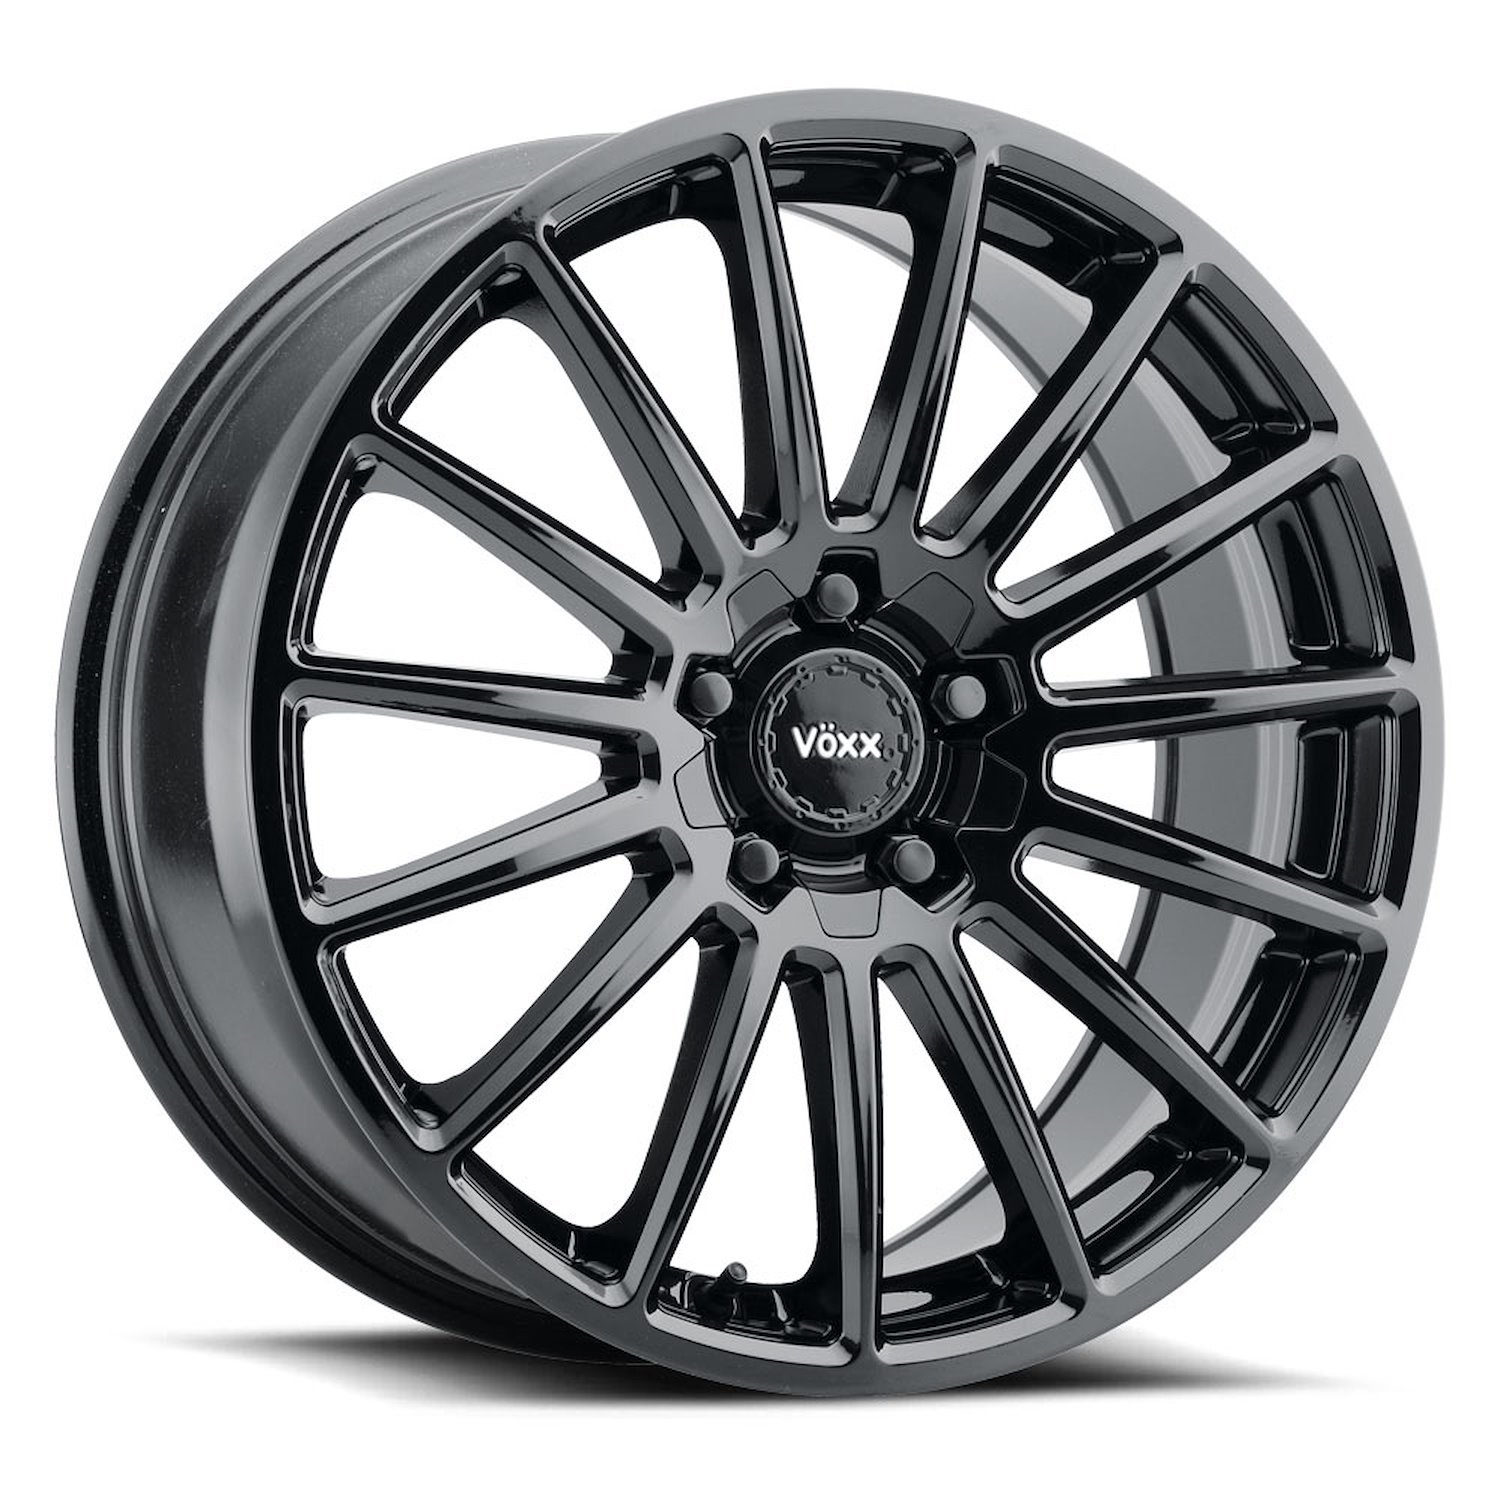 CAS 775-5003-20 GB Casina Wheel [Size: 17" x 7.50"] Finish: Gloss Black